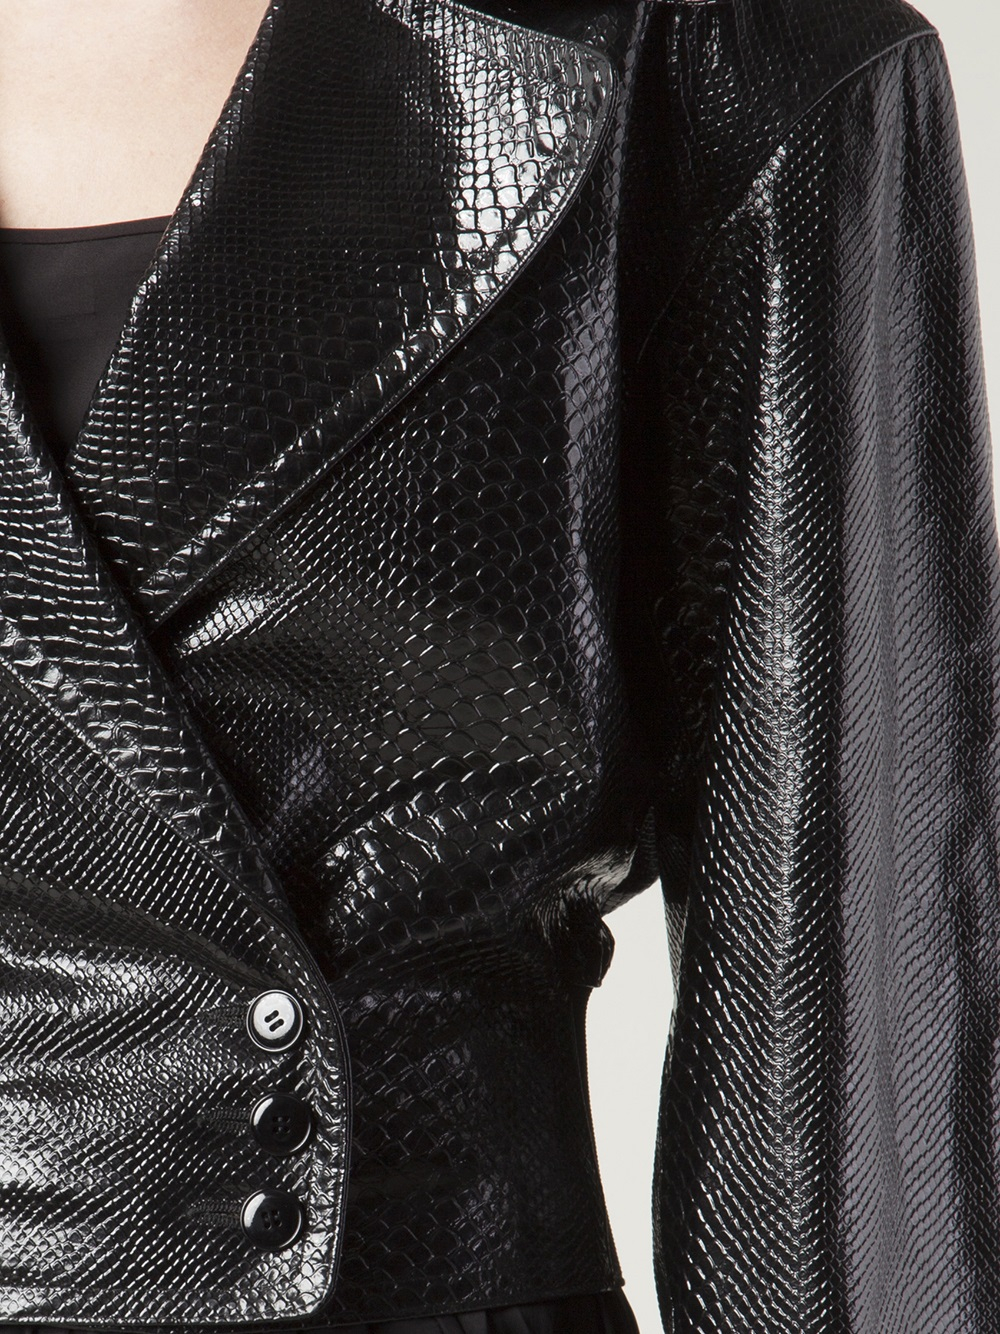 Alaïa Leather Snakeskin Jacket in Black - Lyst